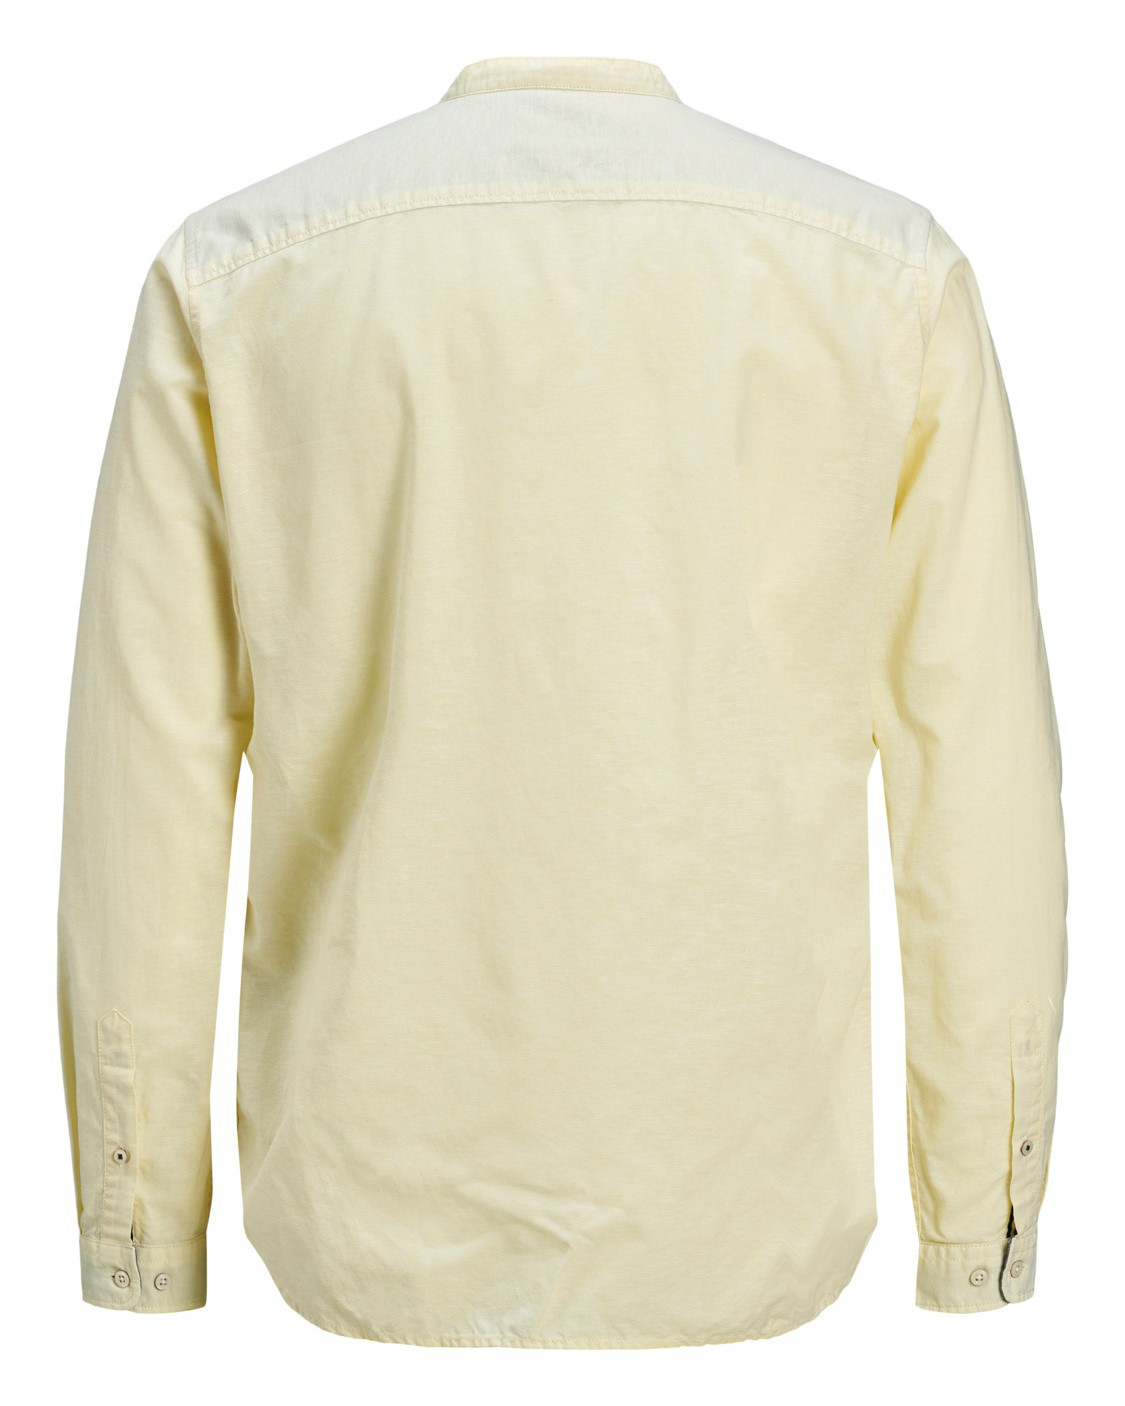 chemise homme JACK JONES blanc GA122 - ZOOODE.COM